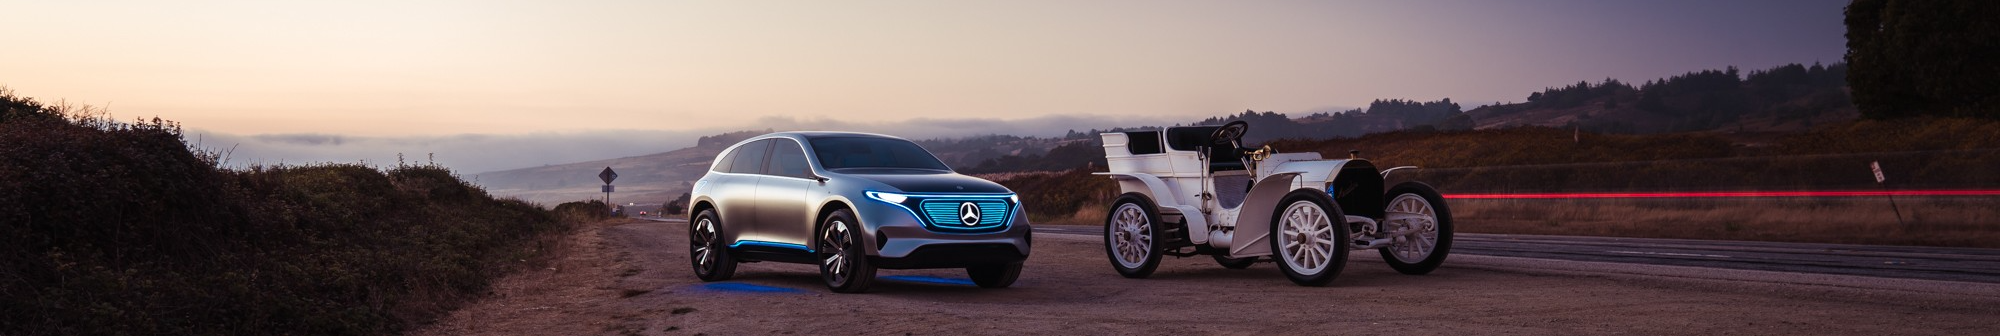 Daimler Mobility background